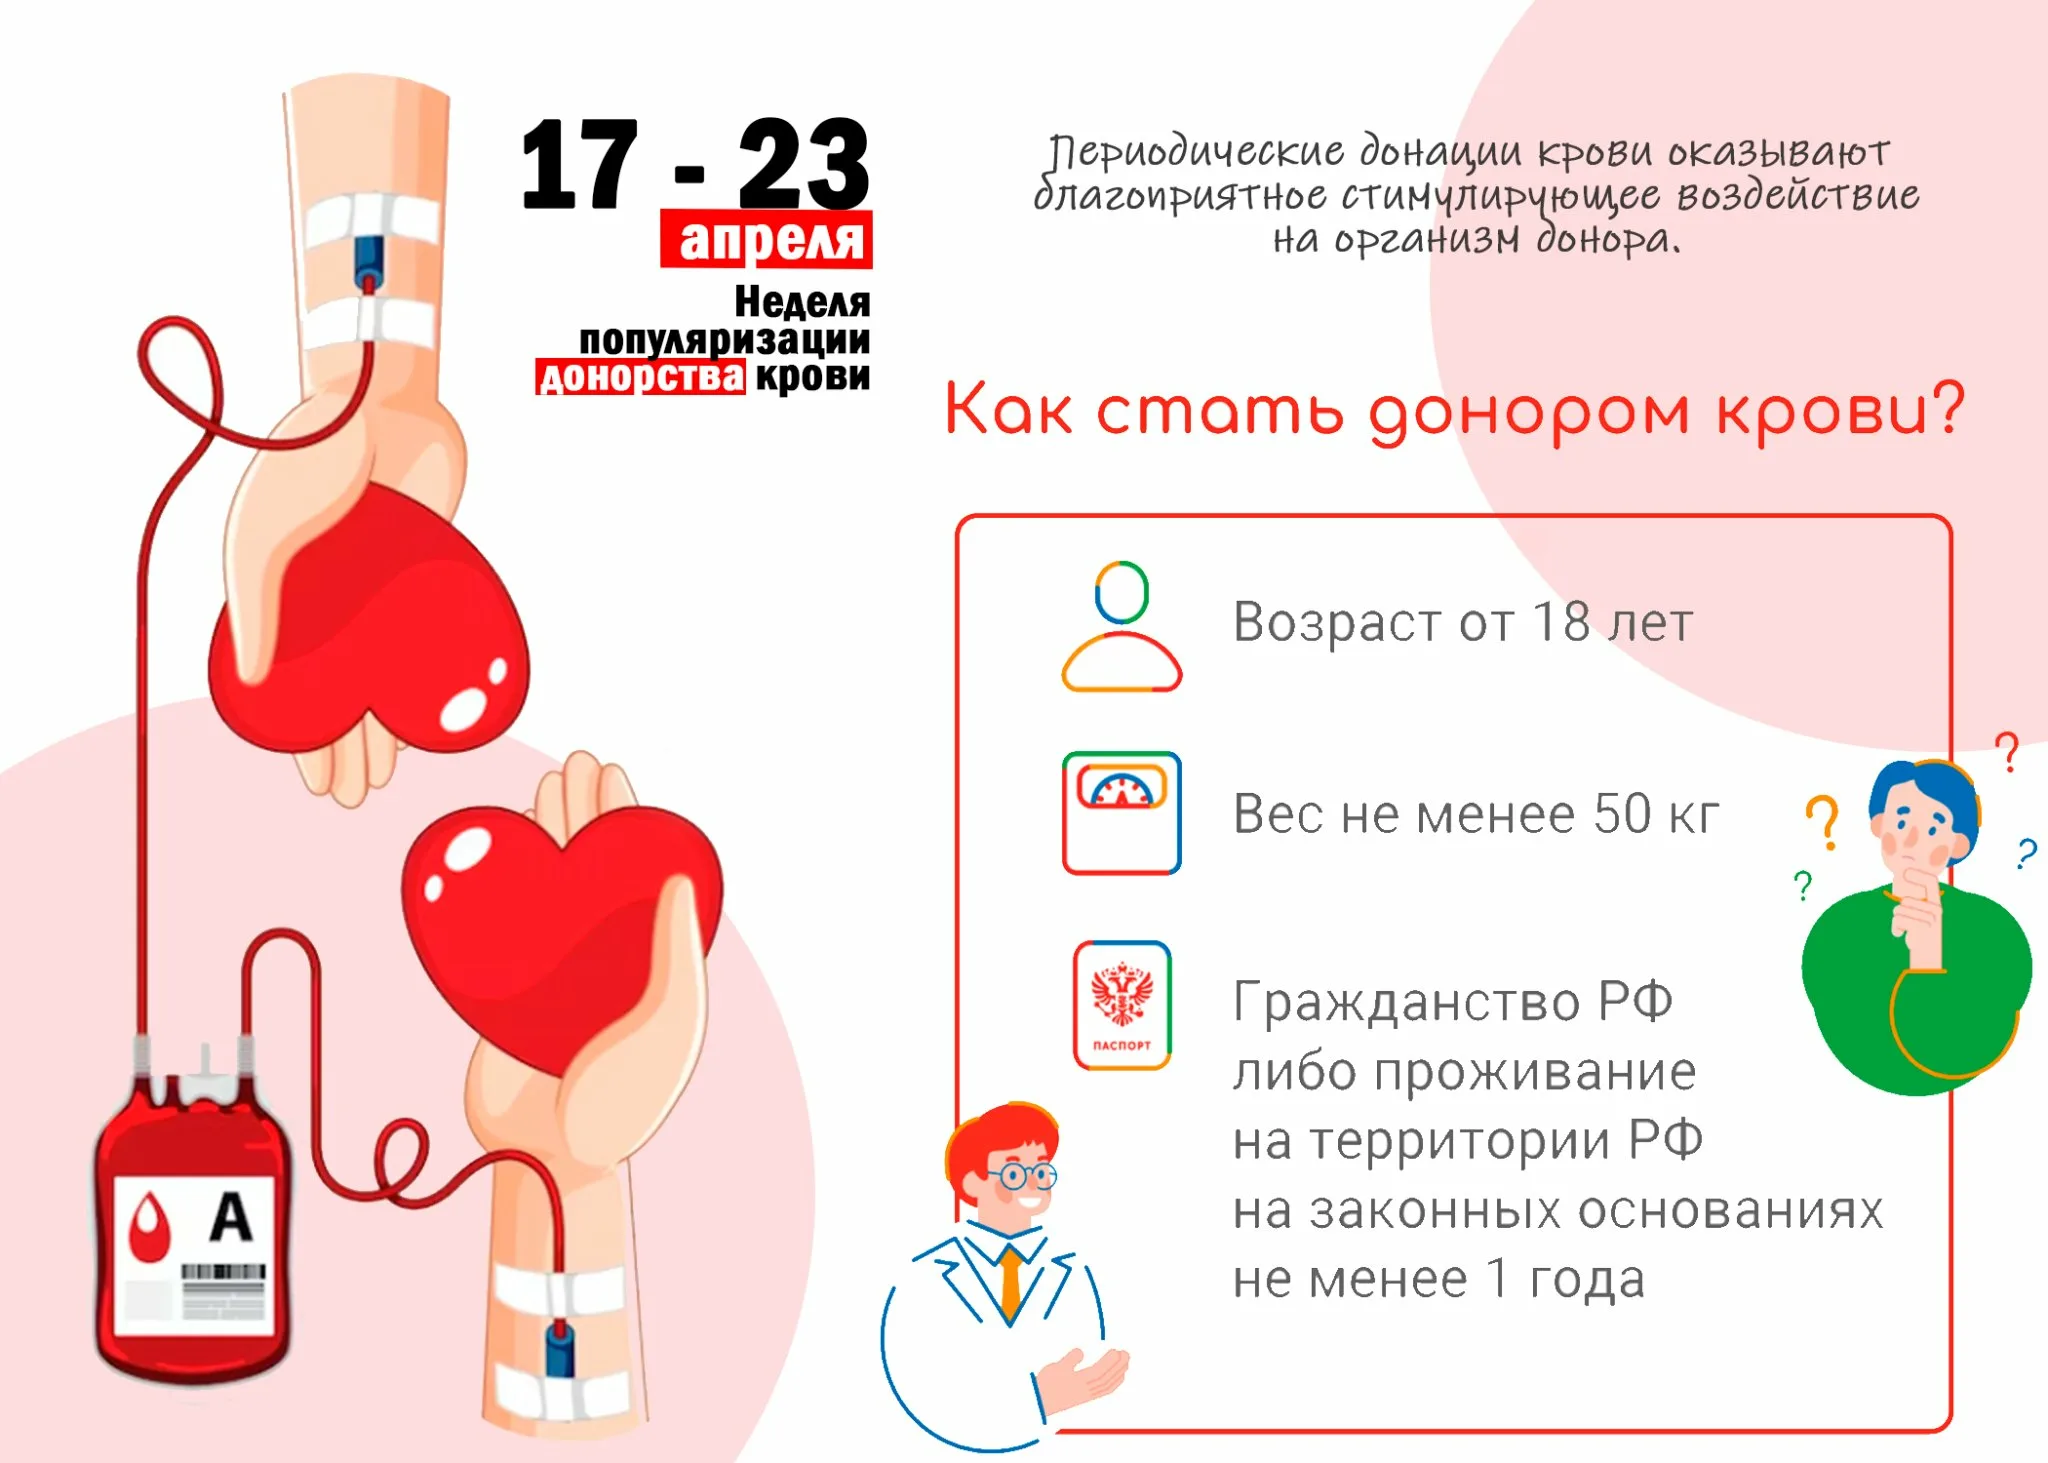 Донорство крови. Неделя донора крови. Донорство в России. День донора крови в России.